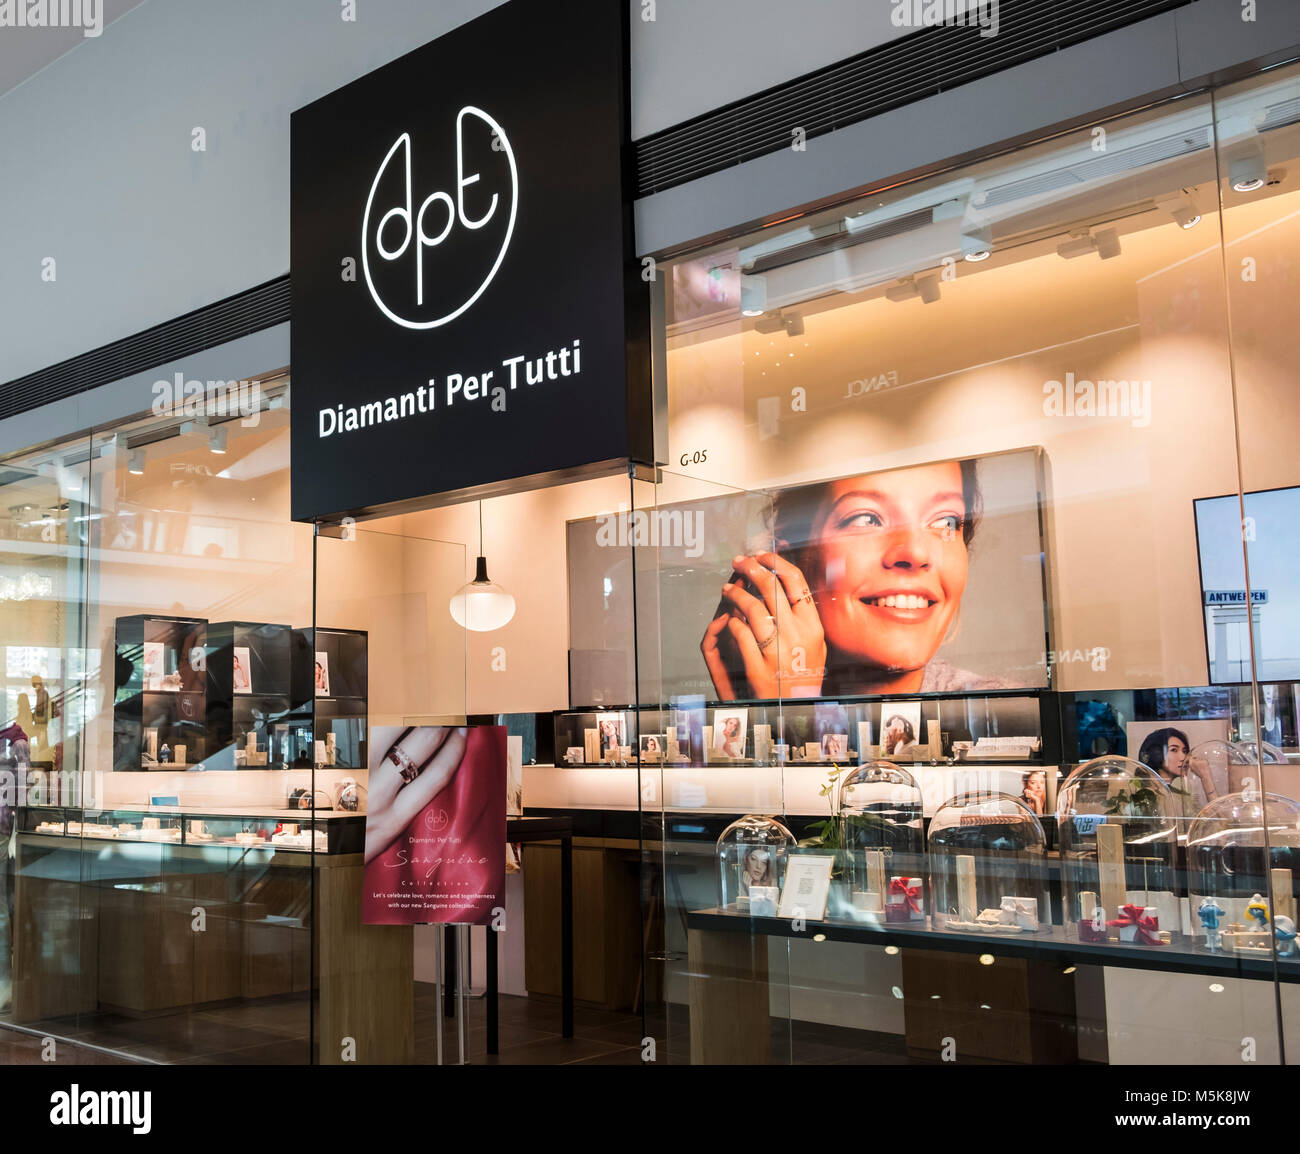 Hongkong - April 4, 2019: Diamanti Per Tutti Store in Hongkong. Stockfoto